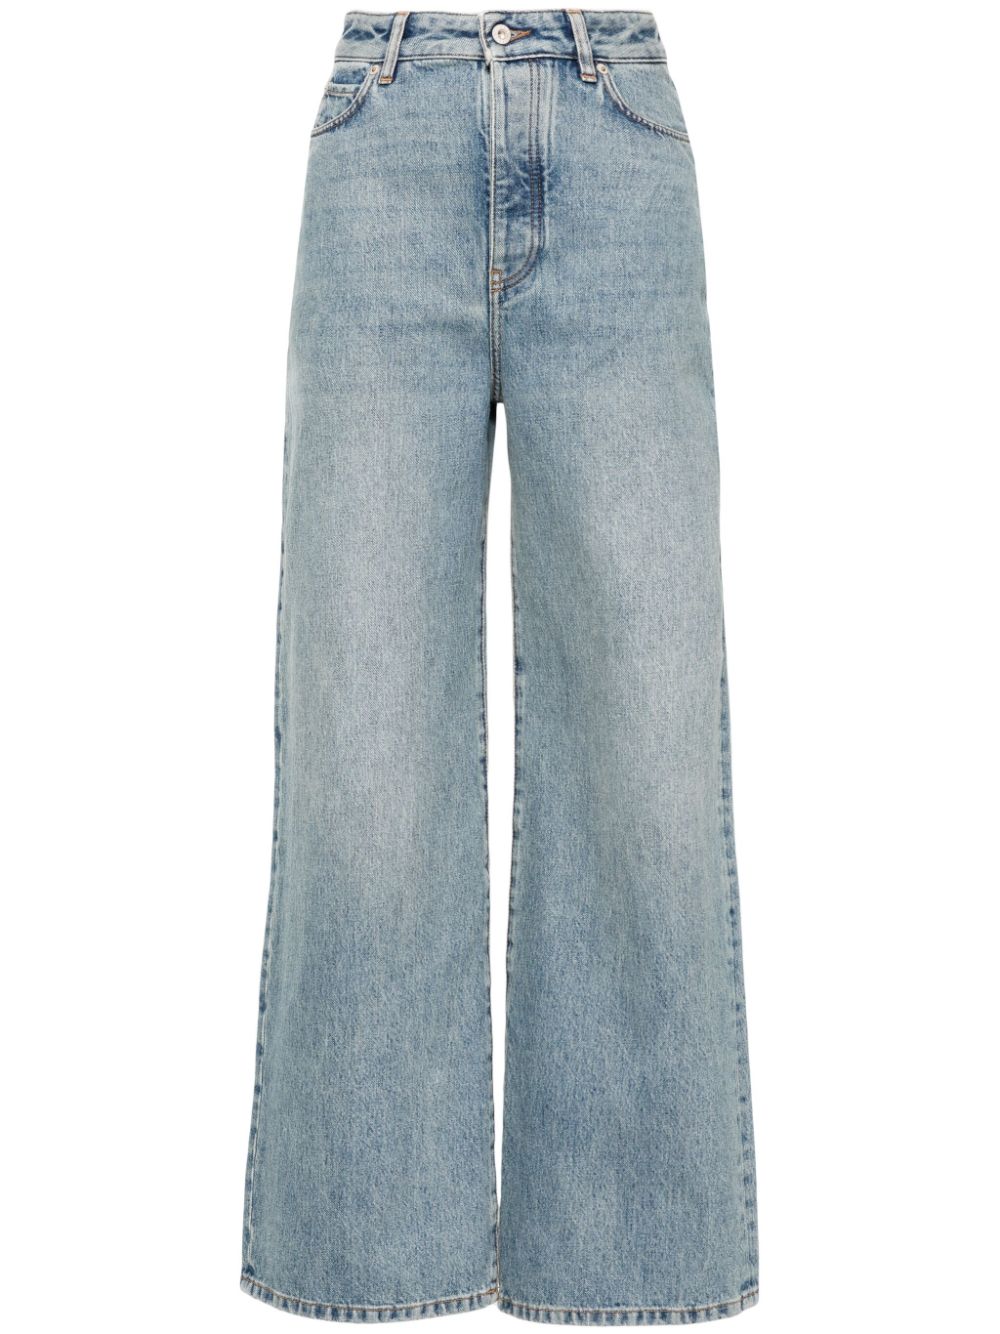 LOEWE- High Waisted Denim Jeans